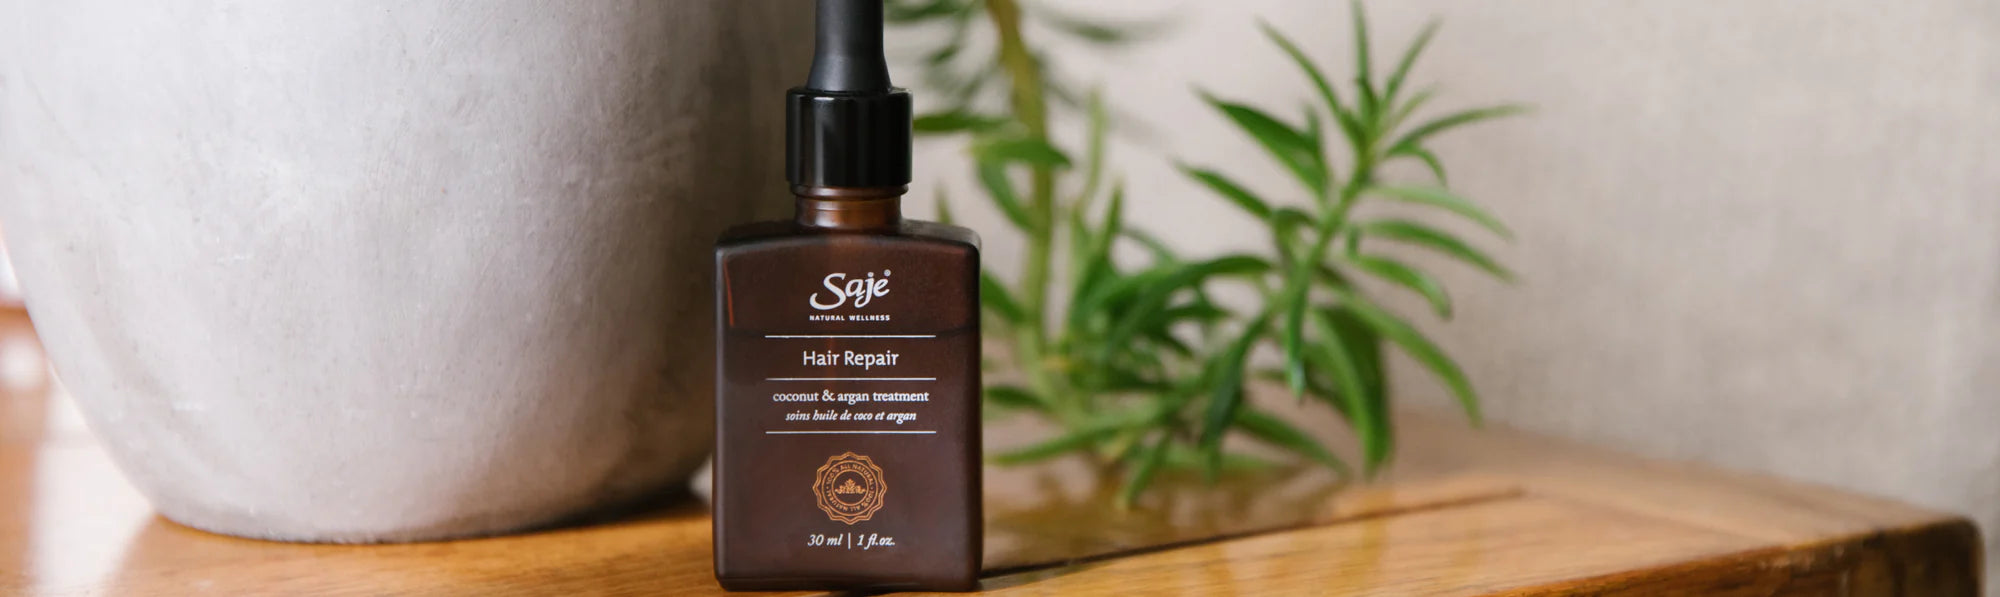 Rosemary Oil for Hair: The Secret in Saje's Hair Repair Treatment